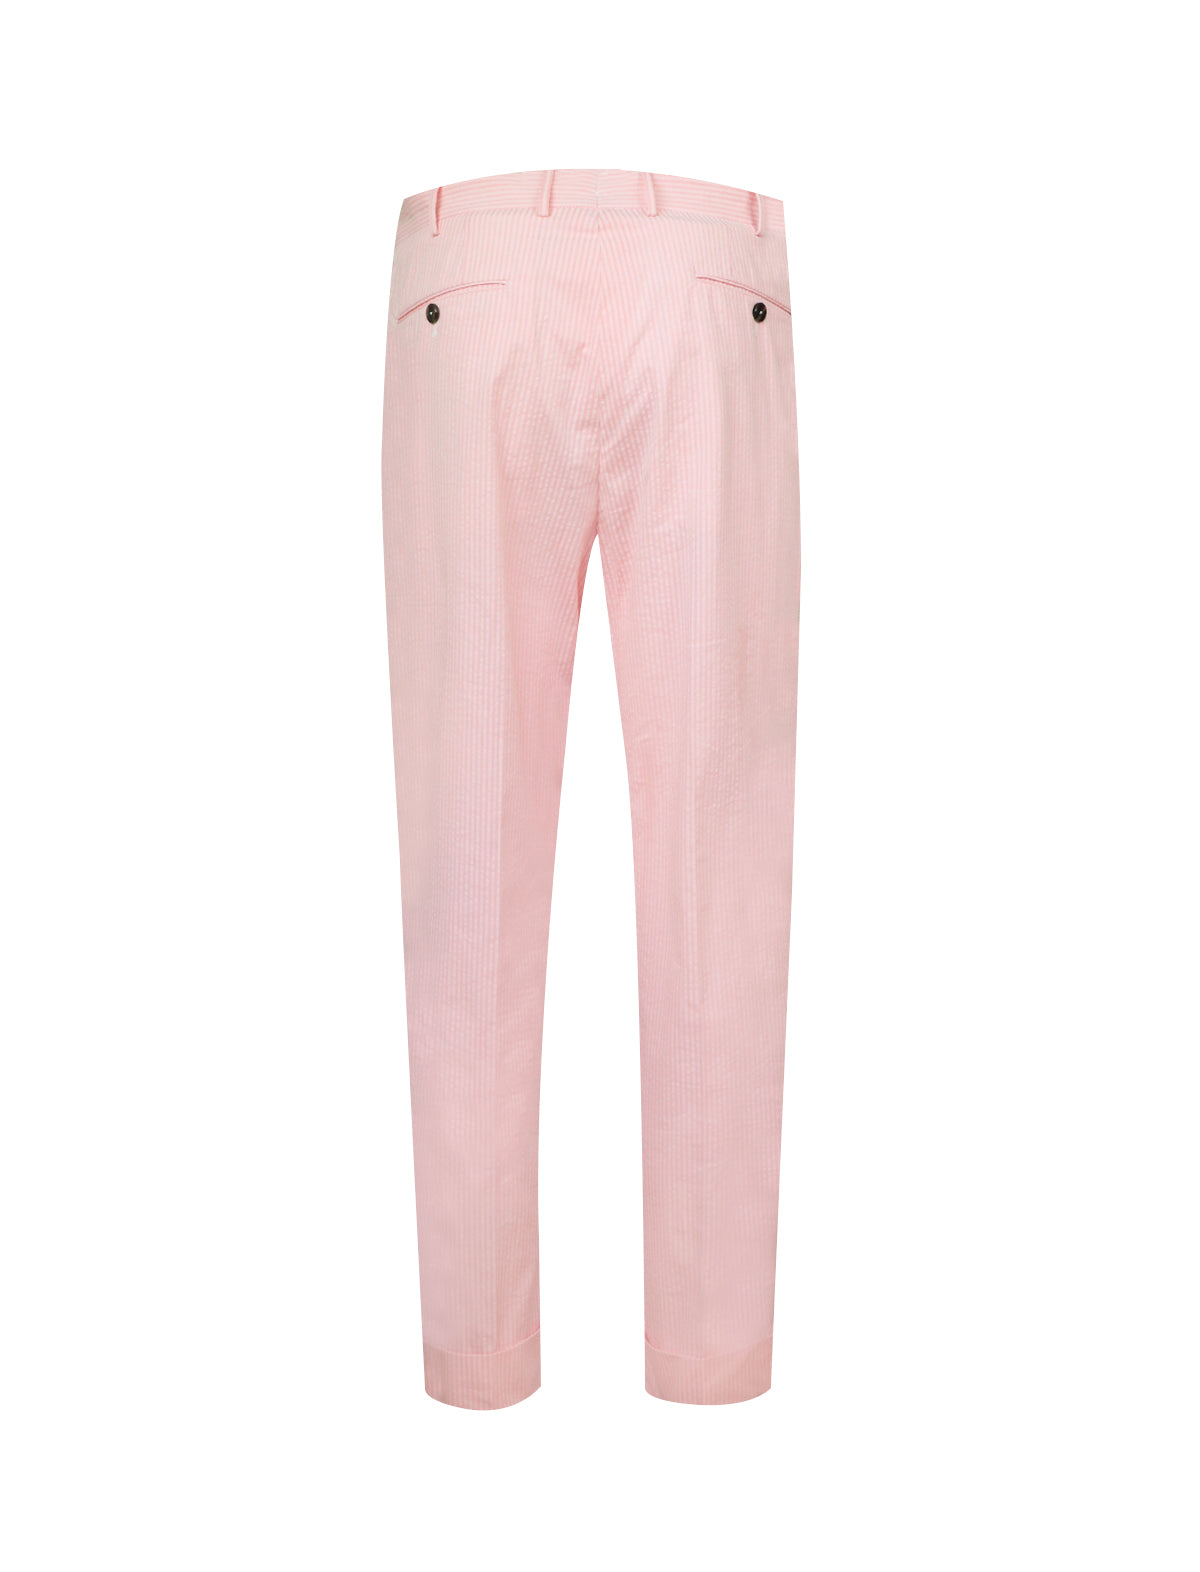 PT Torino Edge Trouser in Pink/White Stripes